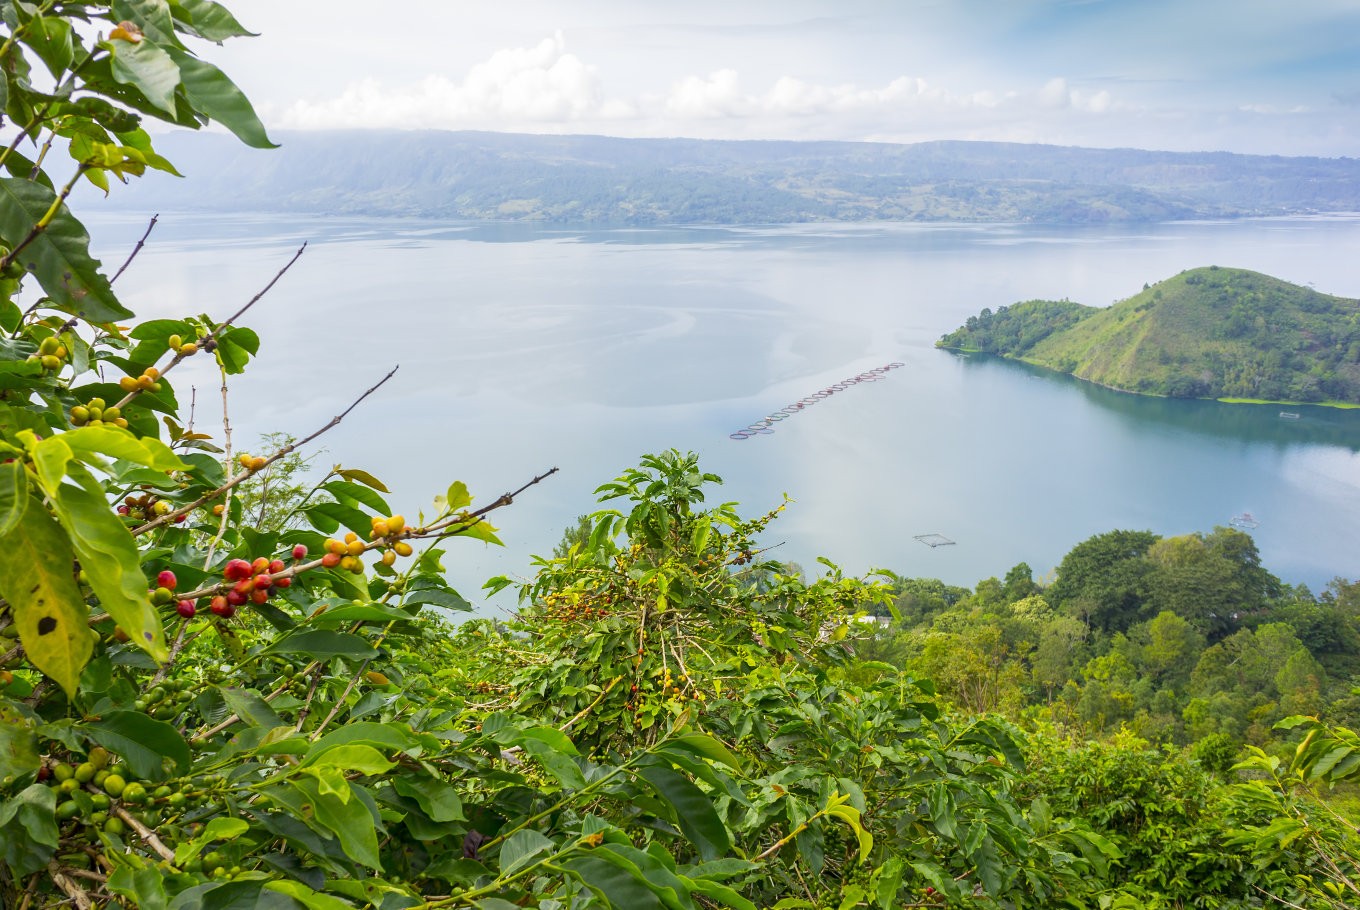 North Sumatra to host coffee festival in Lake Toba